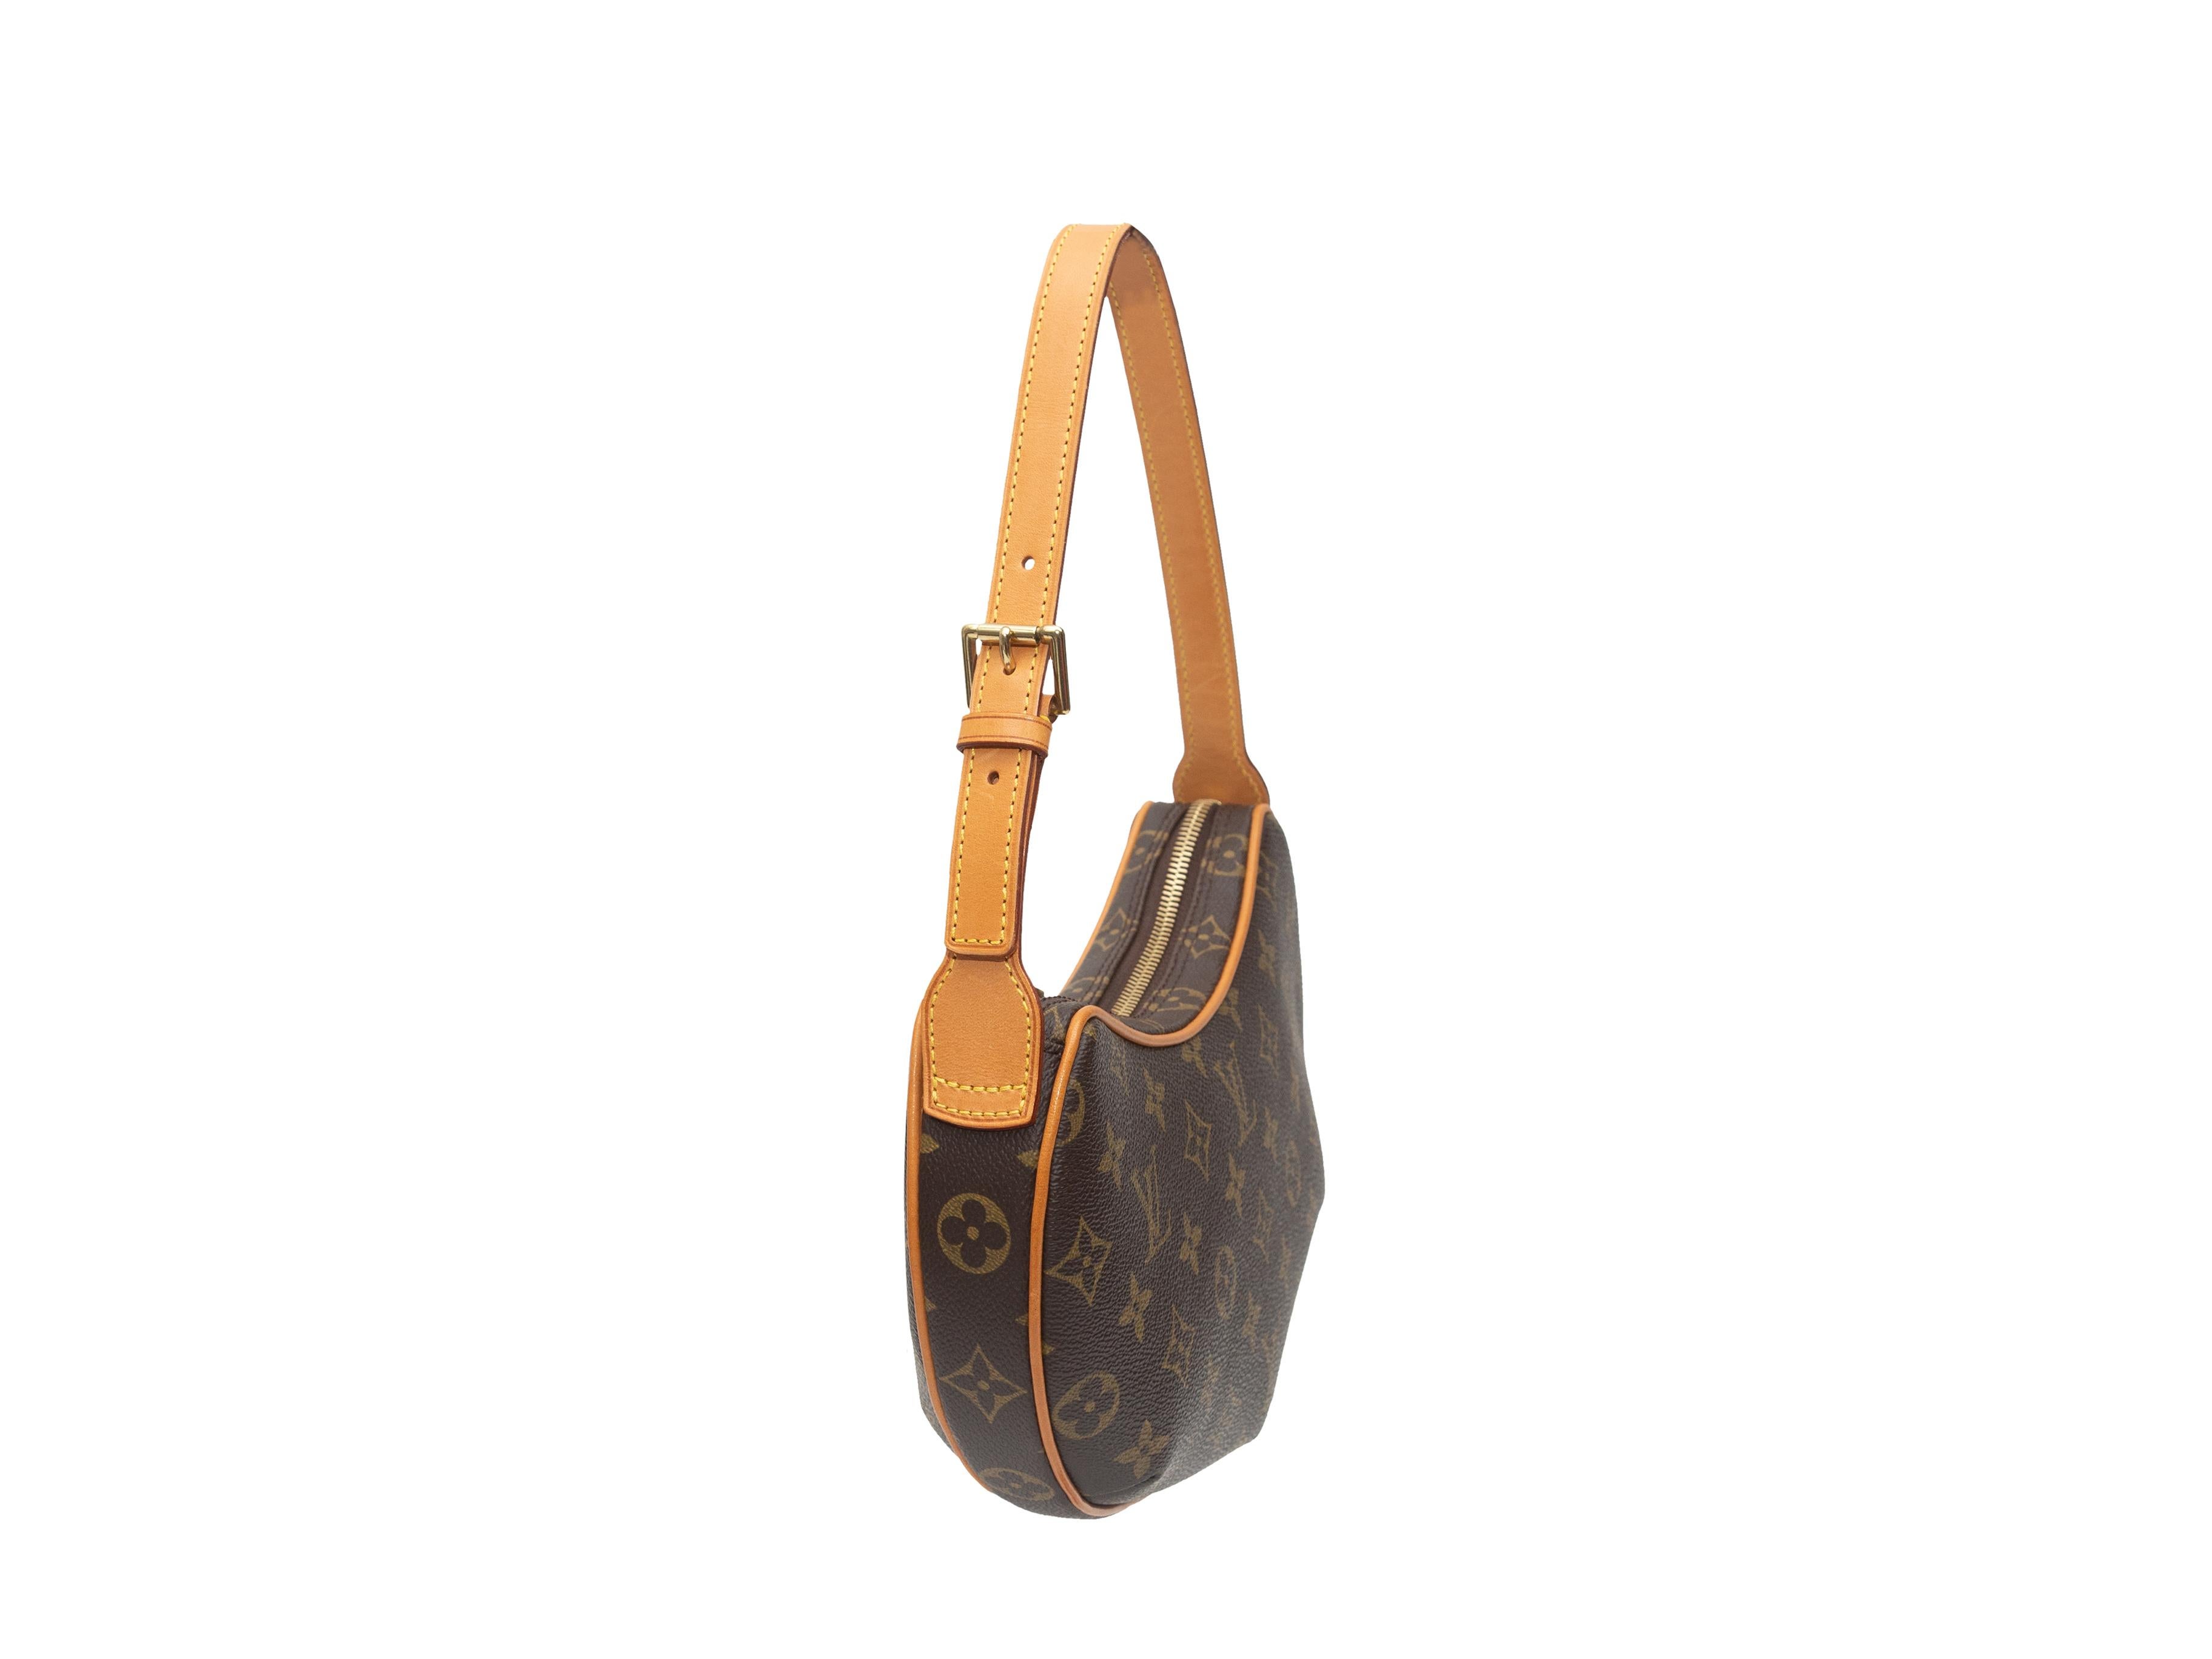 Product details: Vintage brown Monogram Croissant PM bag by Louis Vuitton. Circa 2003. Gold-tone hardware. Adjustable shoulder strap. Zip closure at top. 10.5